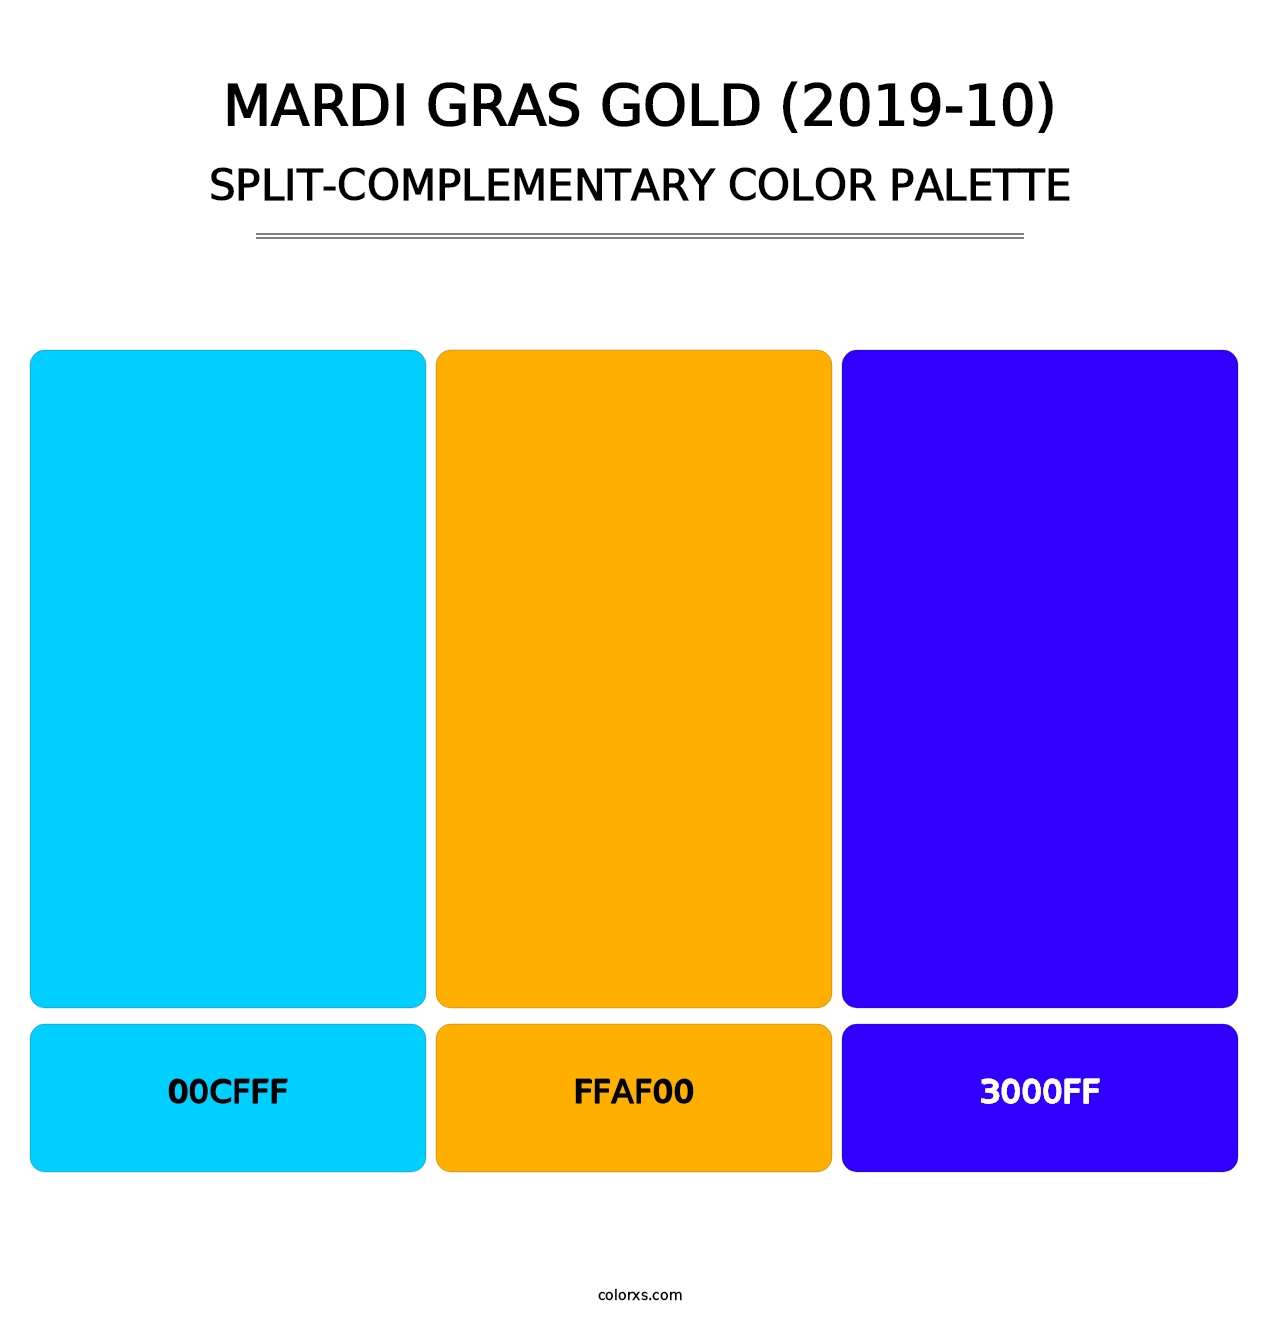 Mardi Gras Gold (2019-10) - Split-Complementary Color Palette